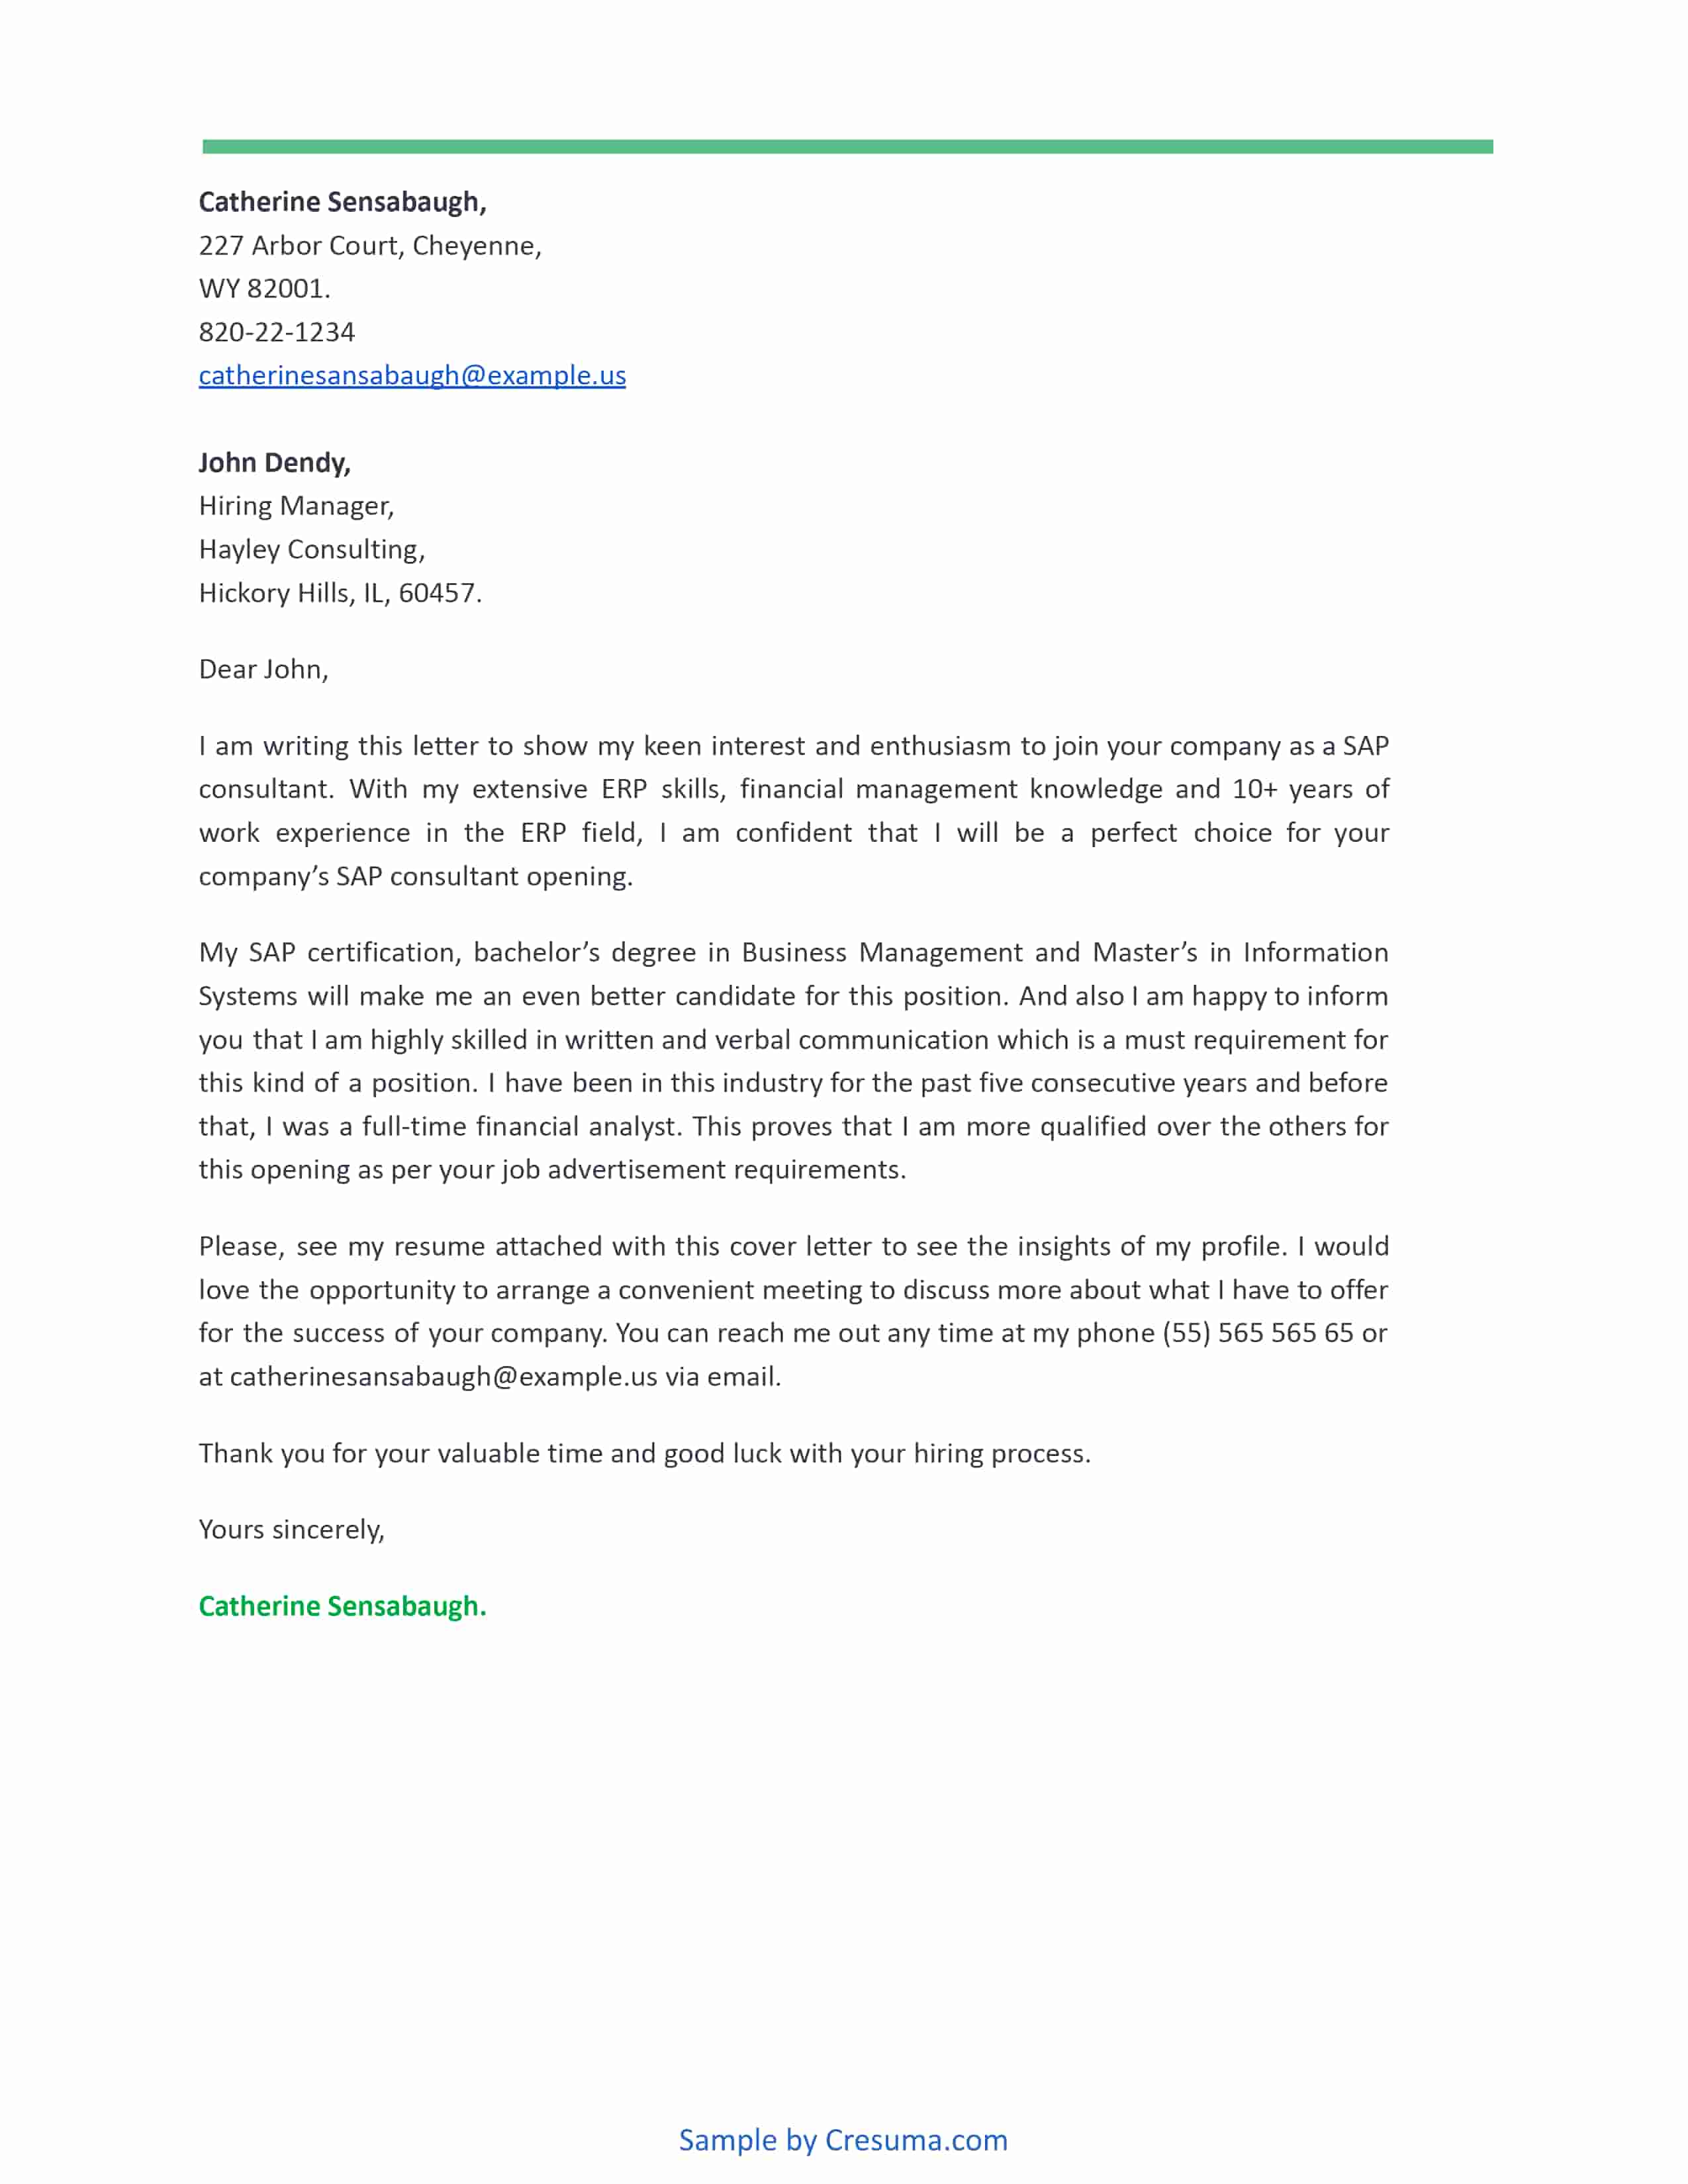 SAP Consultant cover letter example by cresuma.com